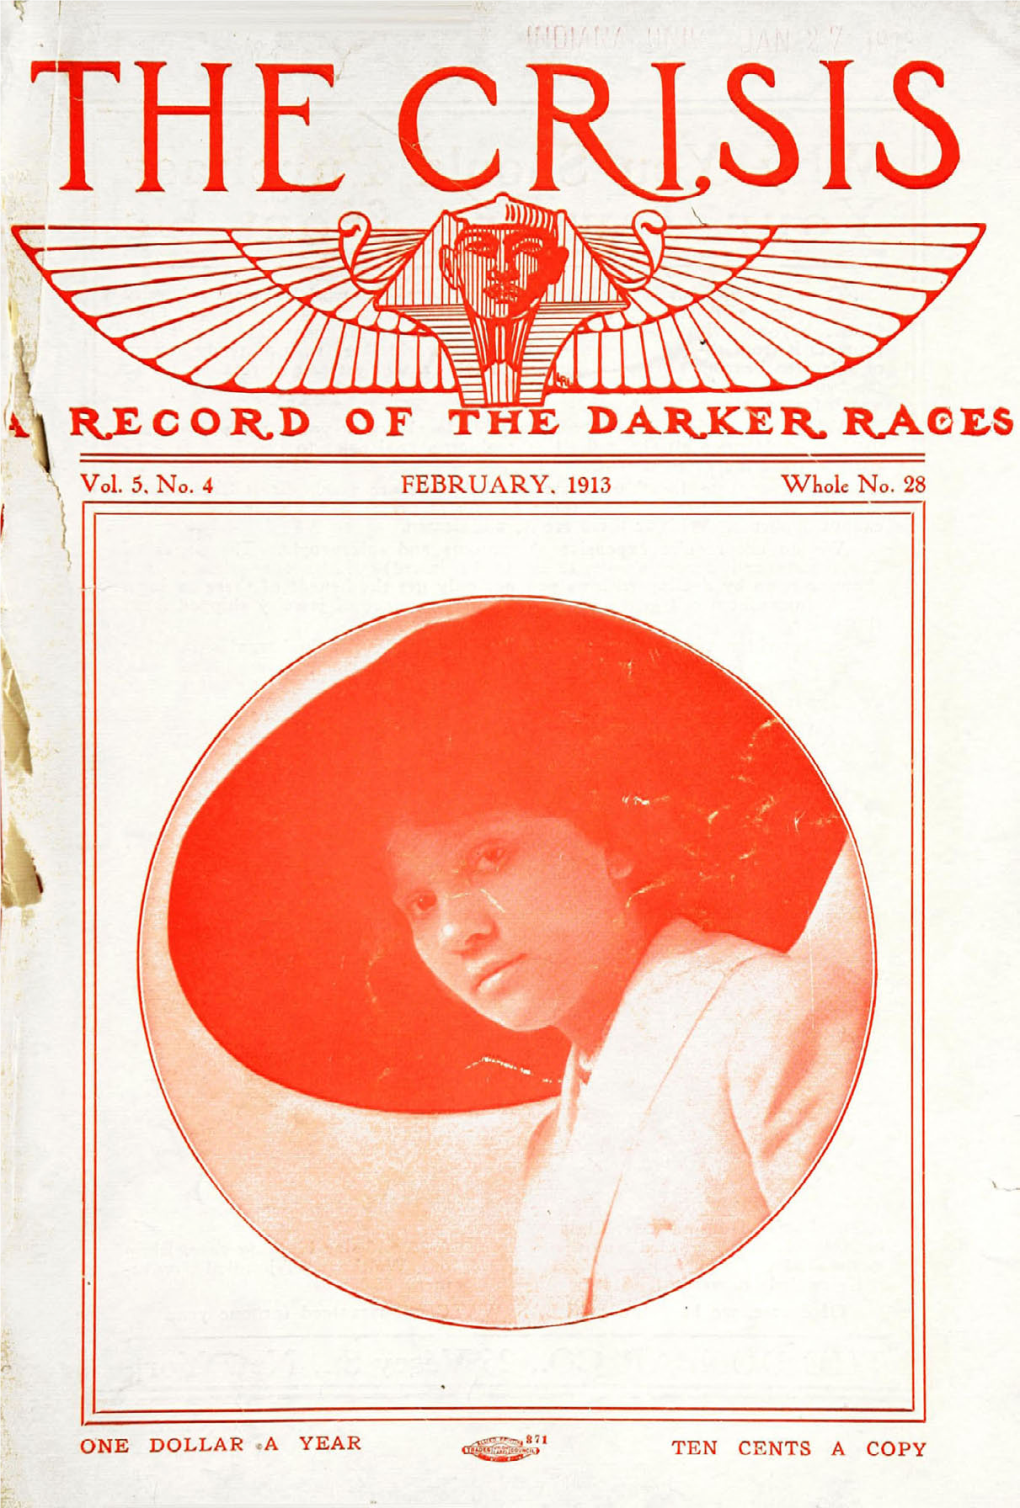 The Crisis Vol. 5, No. 4 (February, 1913)